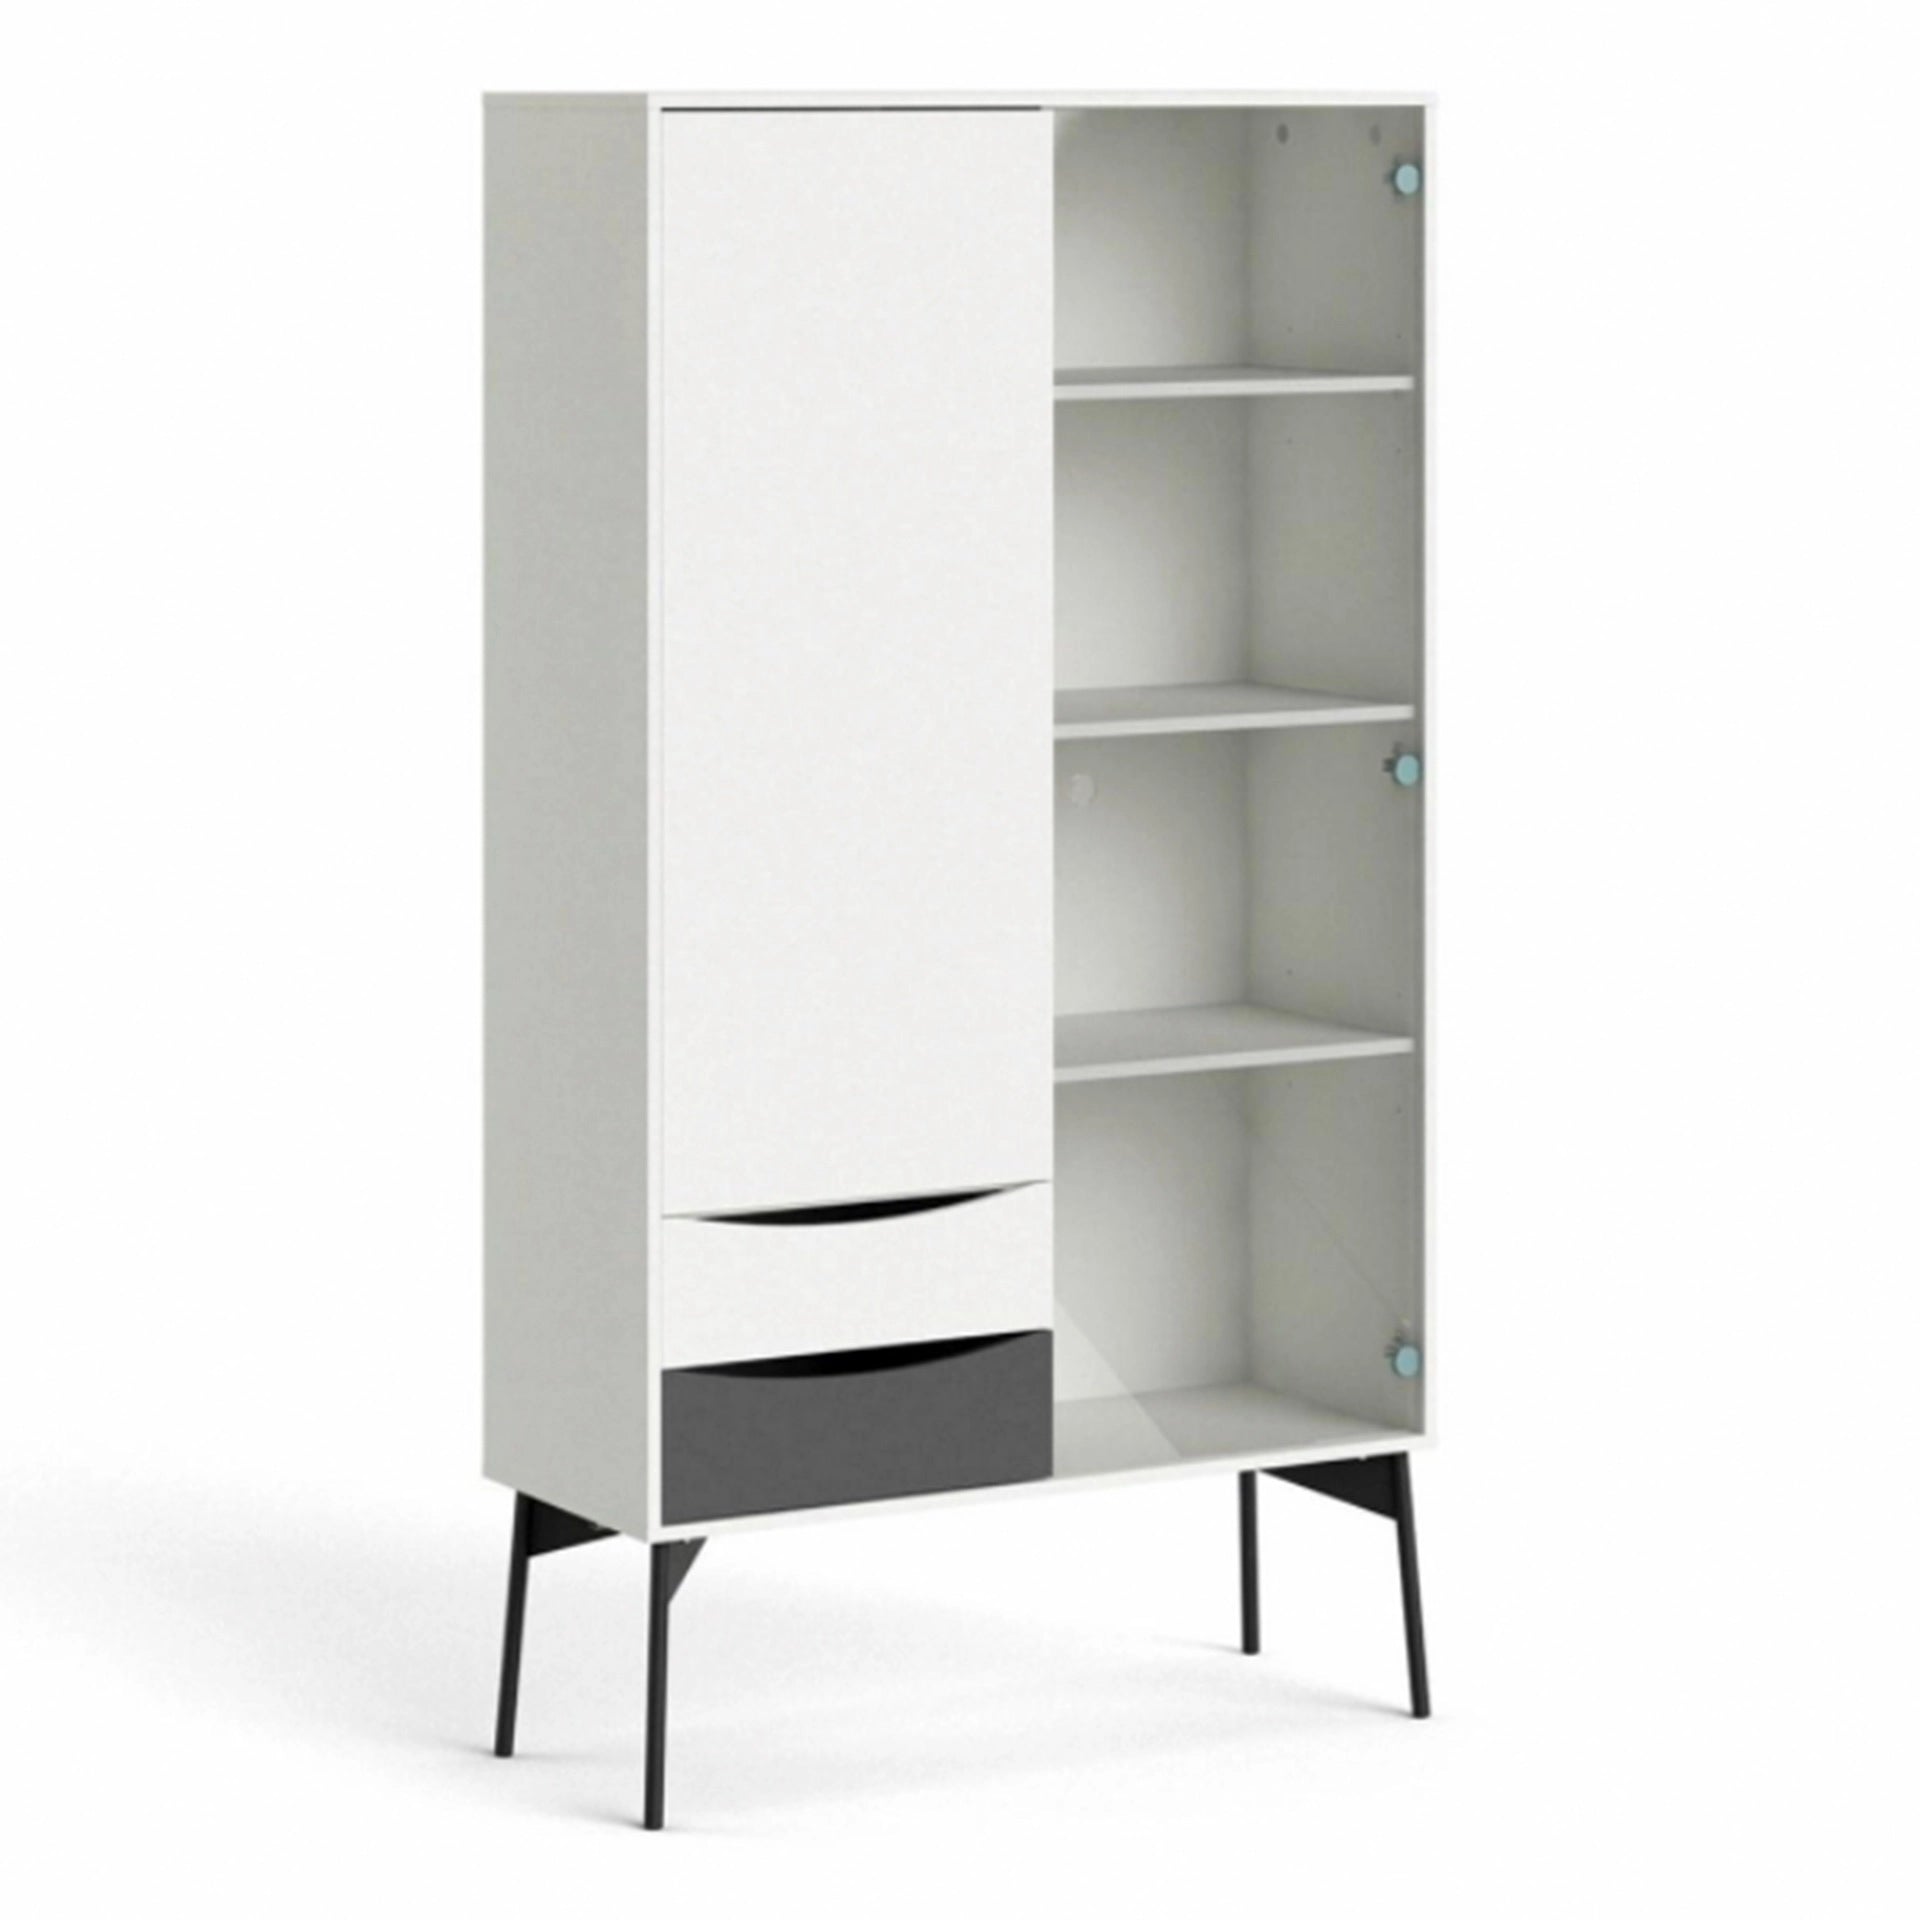 Furniture To Go Fur China Cabinet 1 Door + 1 Glass Door + 2 Drawers in Grey & White